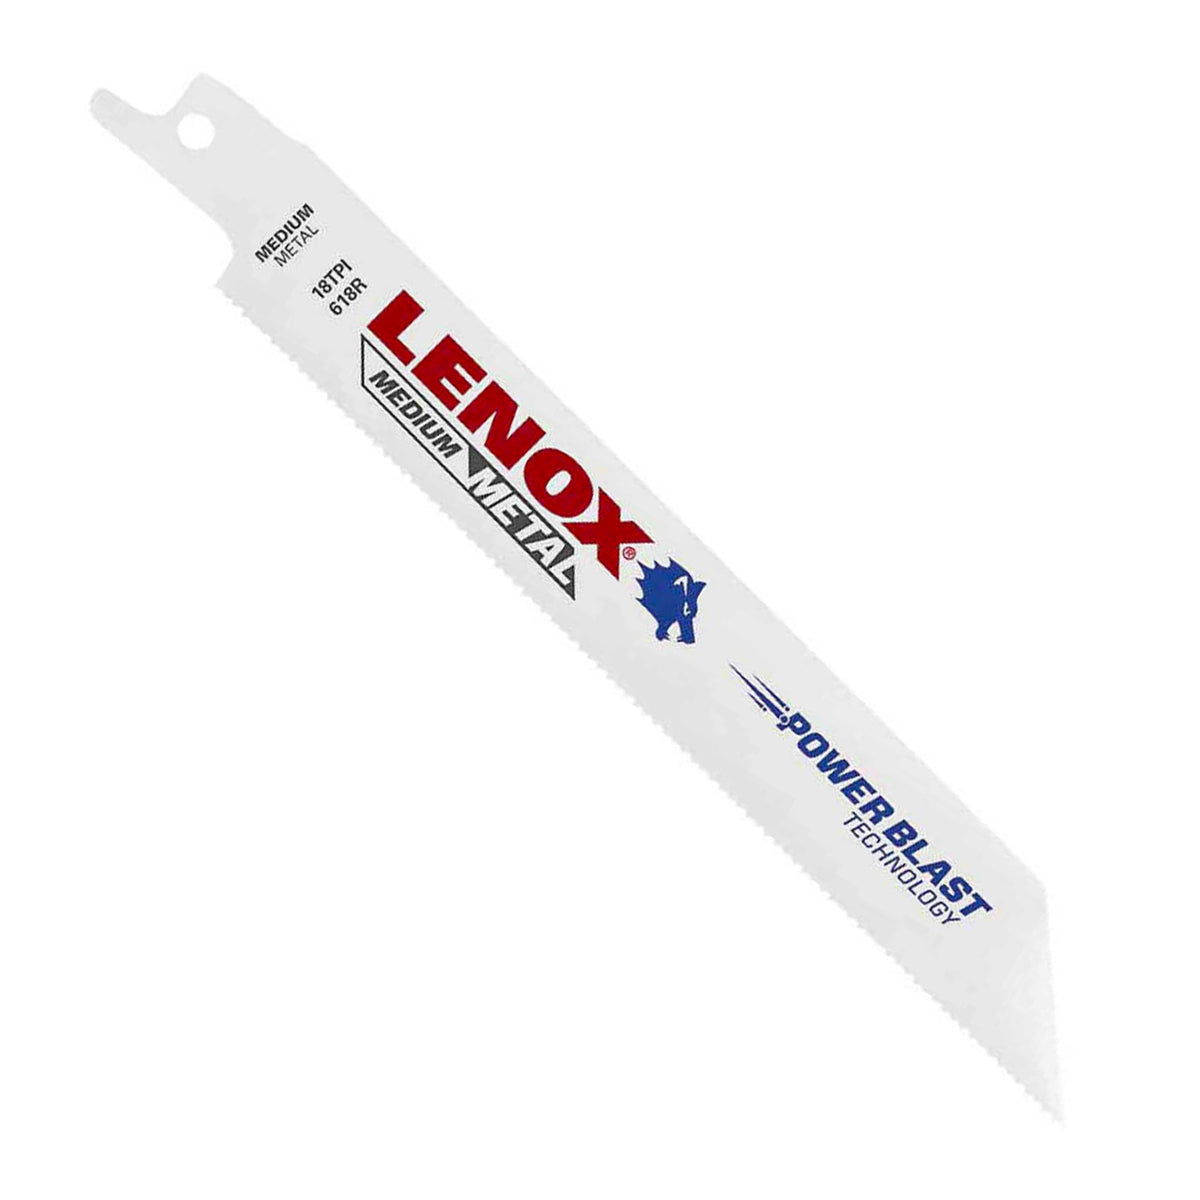 Lenox Metal Cutting Reciprocating Saw Blades - 618R - 6", 18 TPI